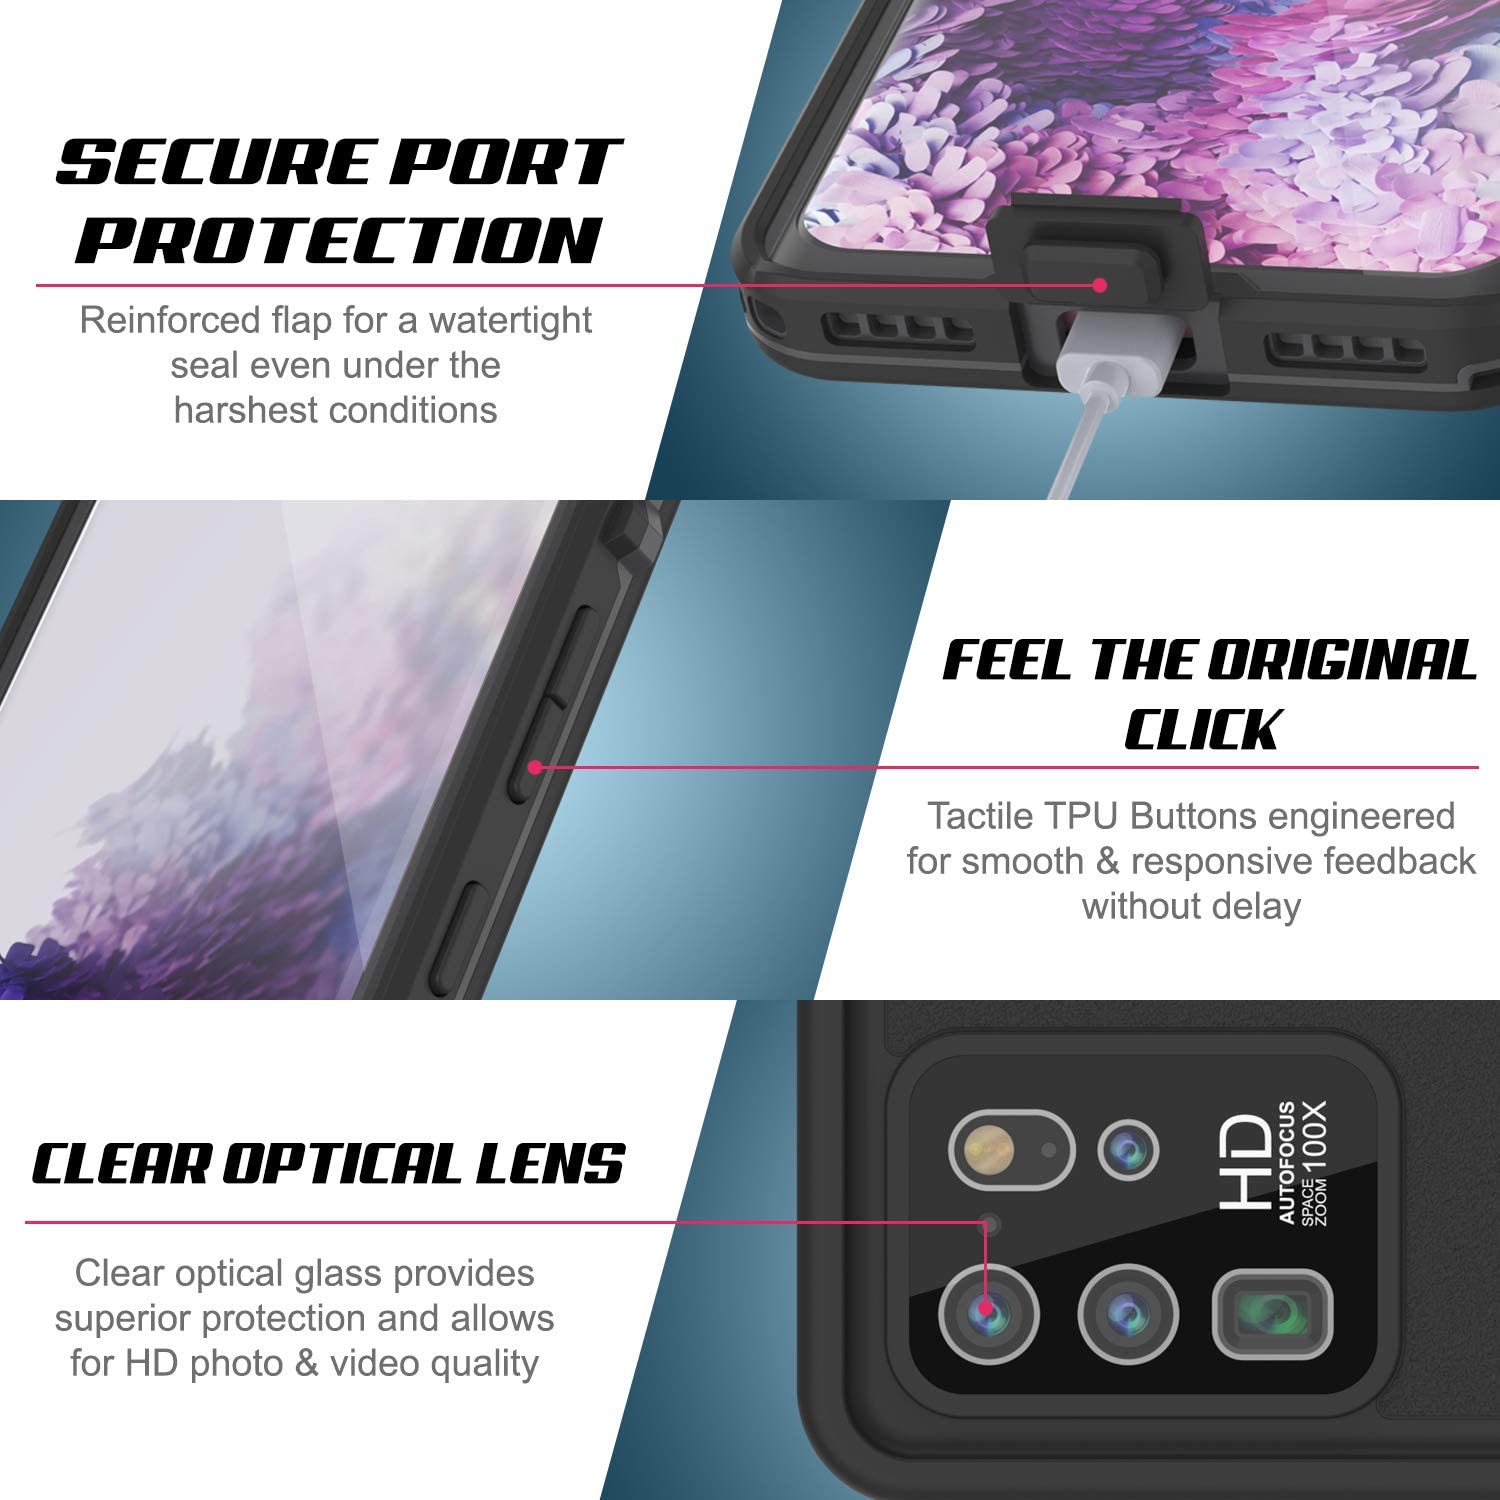 Galaxy S20 Ultra Waterproof Case, Punkcase [KickStud Series] Armor Cover [Light Blue]